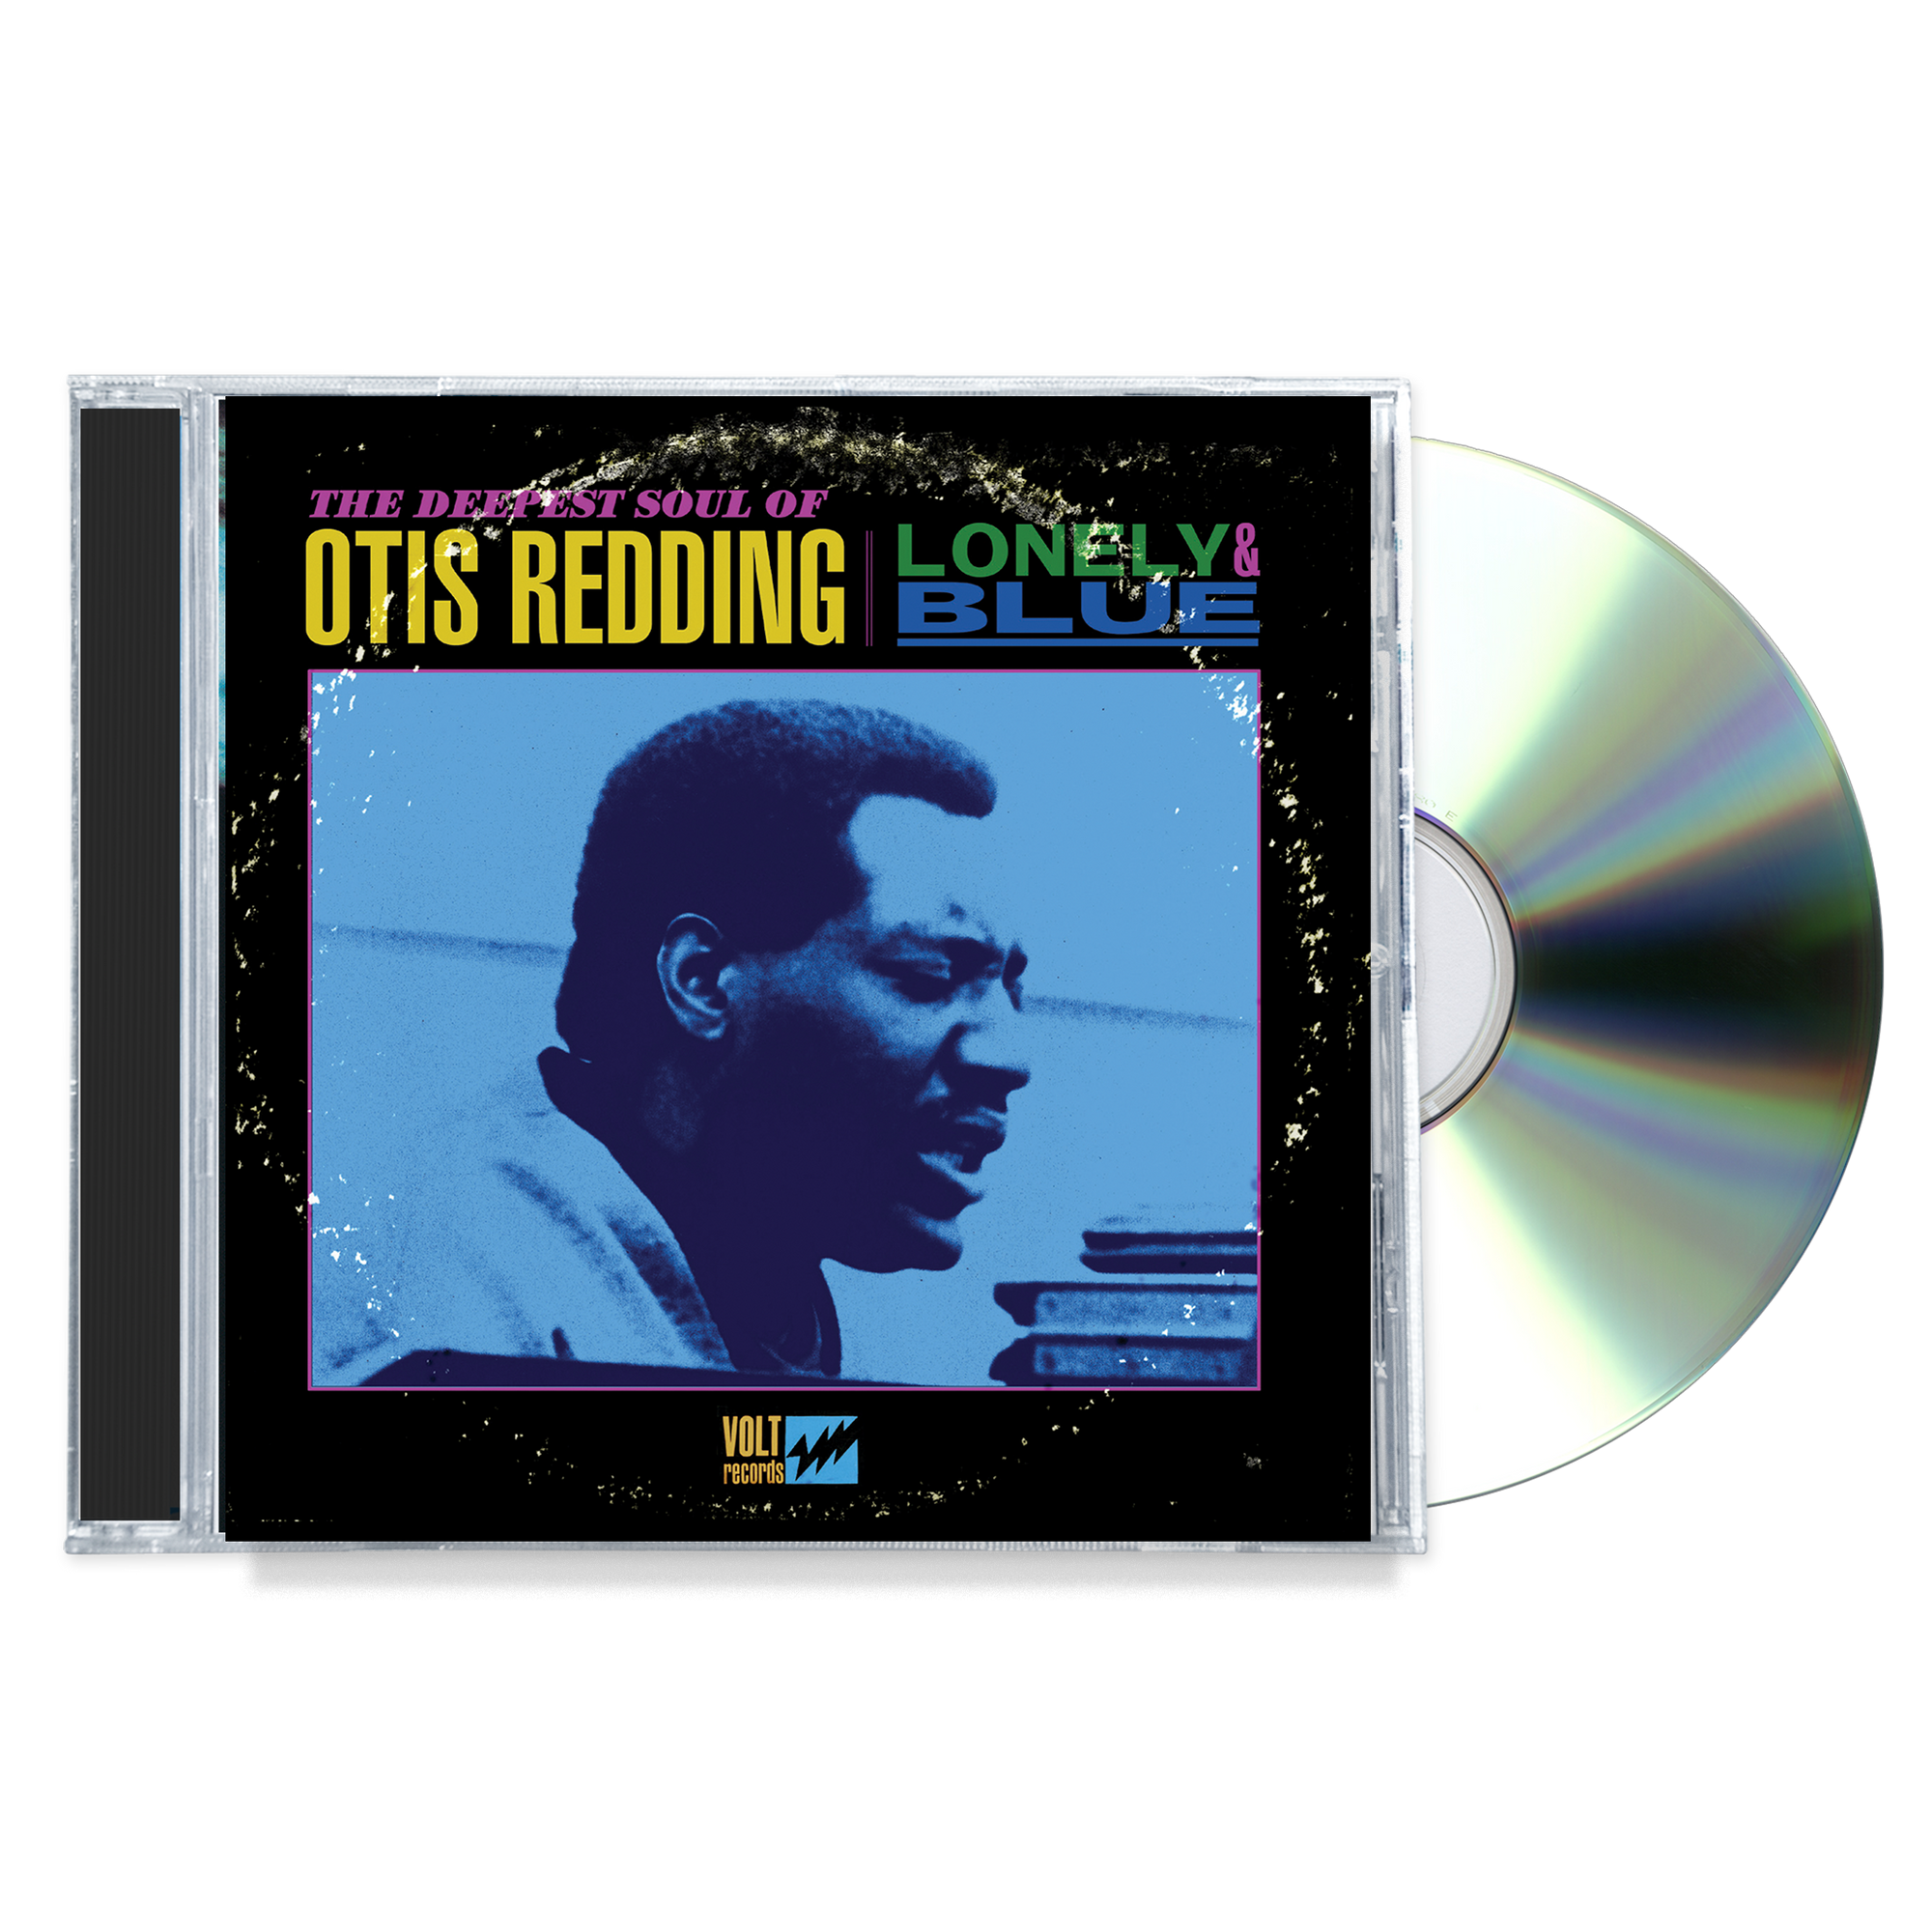 Lonely &amp; Blue: The Deepest Soul of Otis Redding (CD)